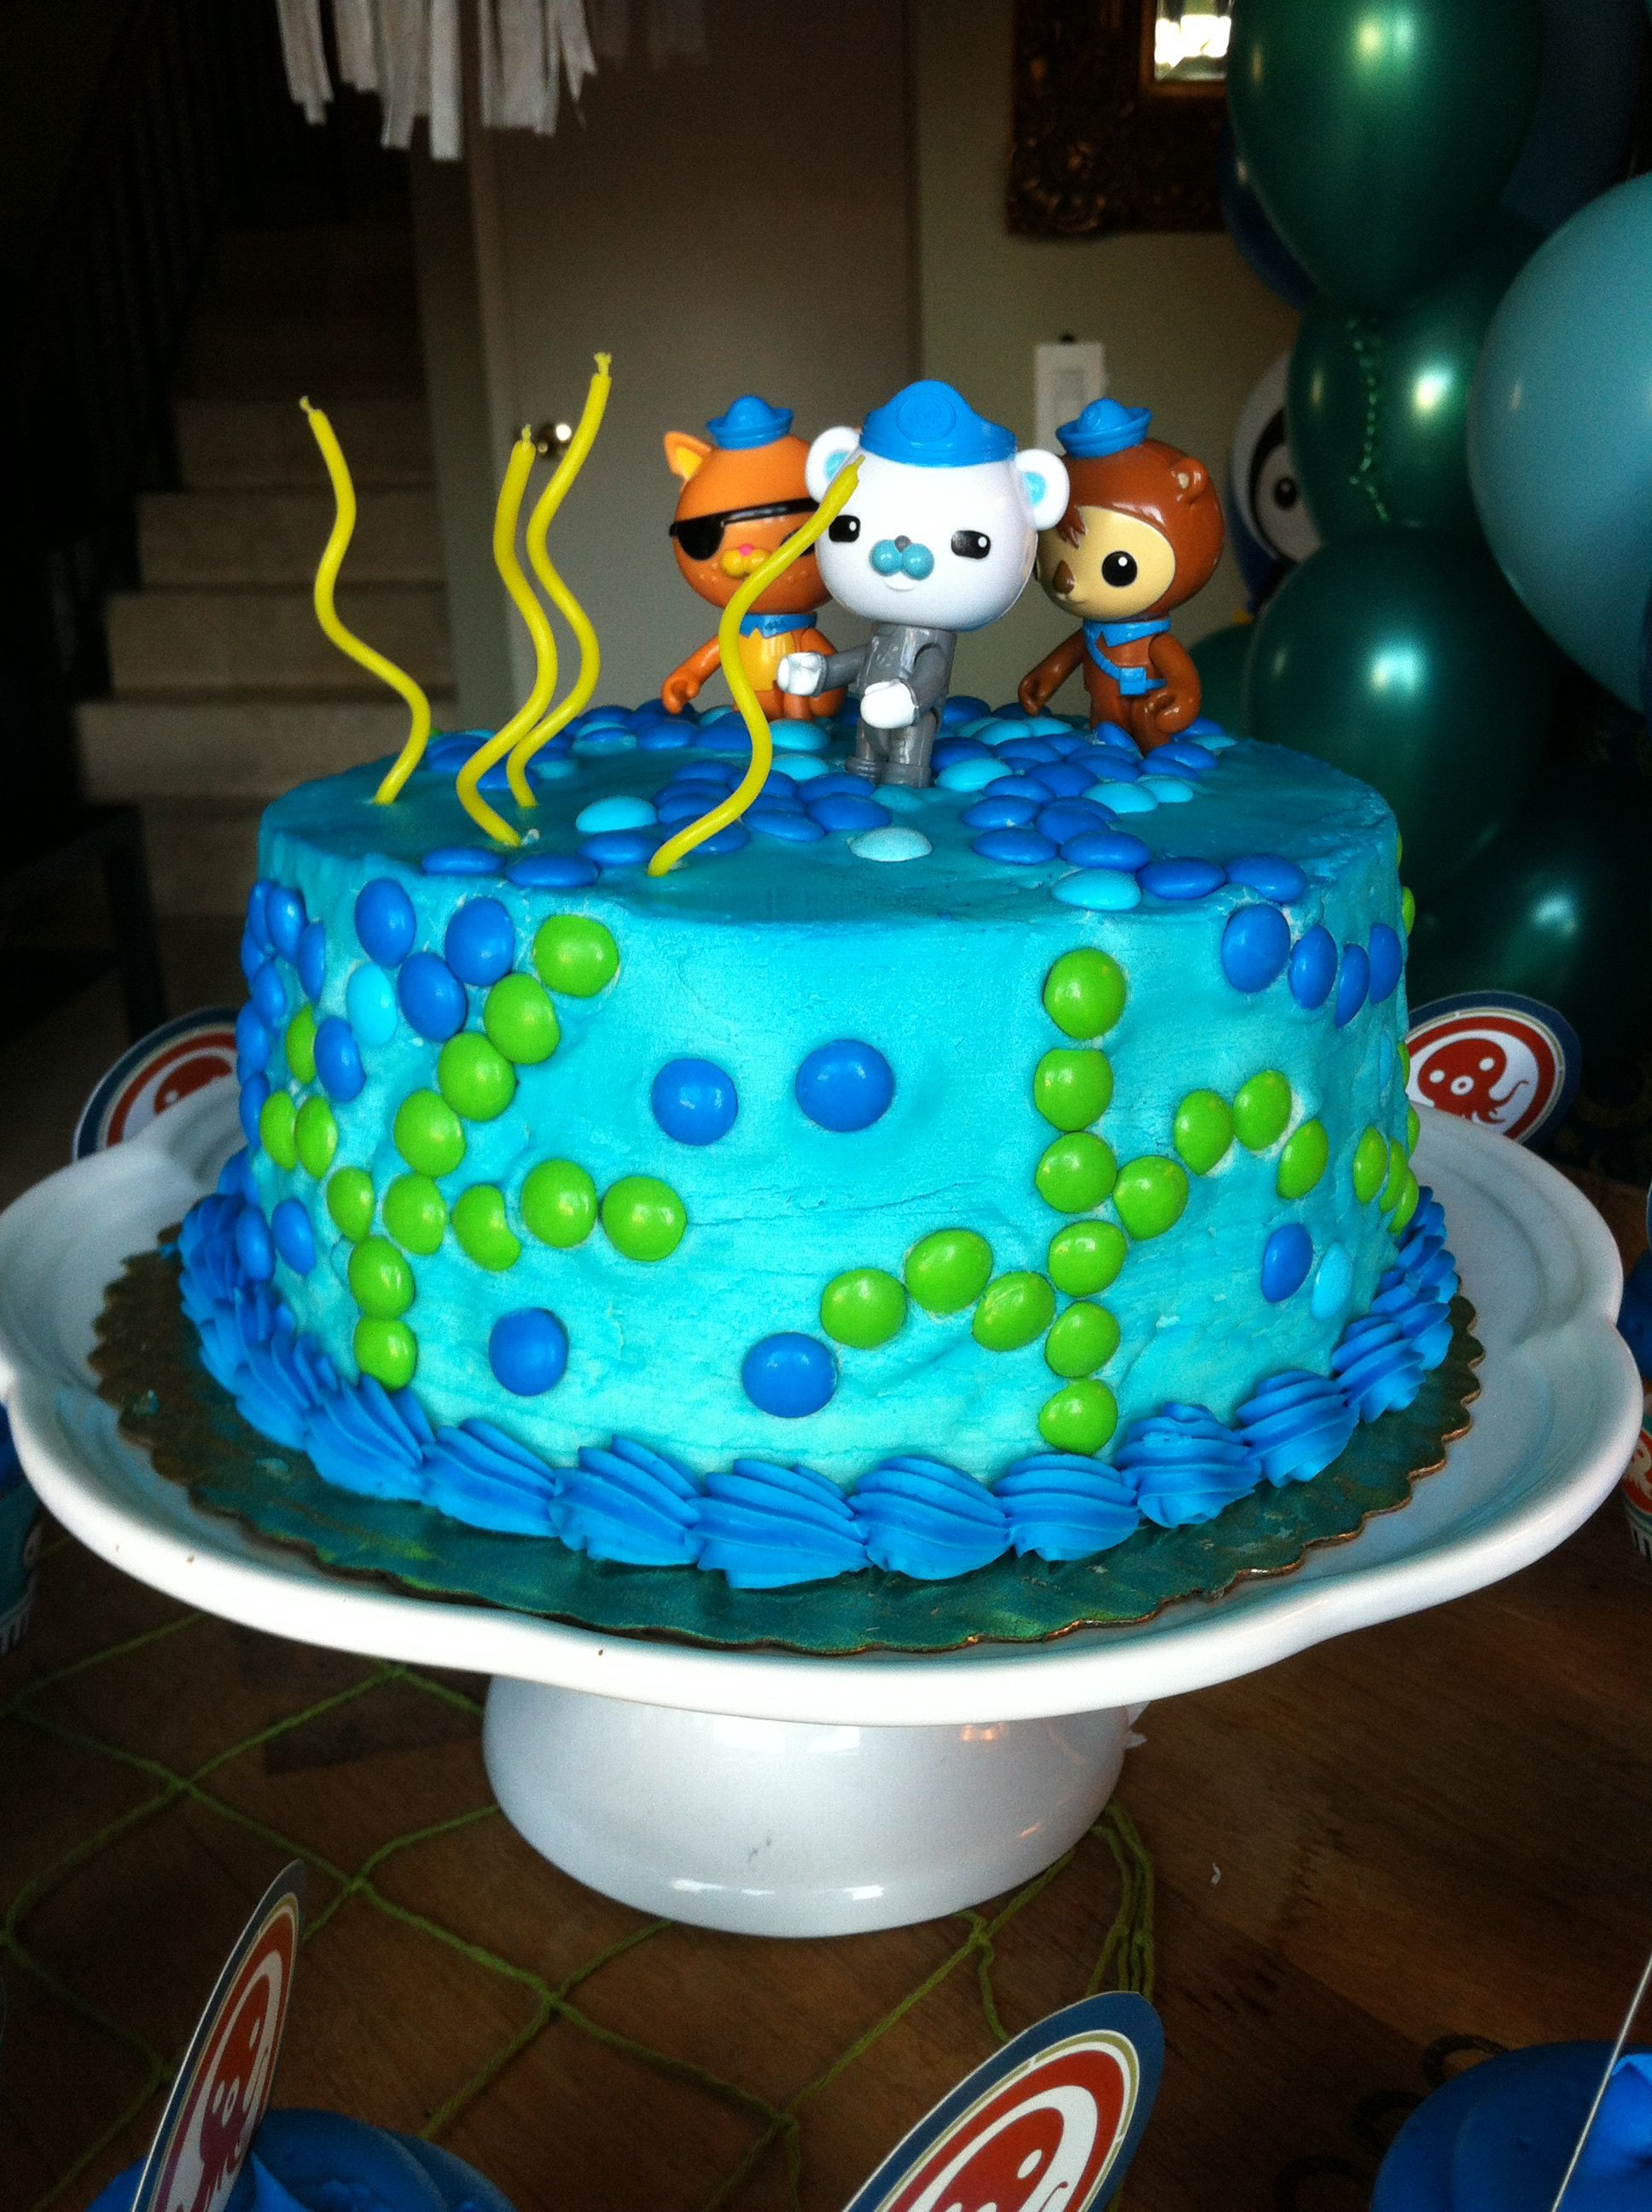 Best ideas about Octonauts Birthday Cake
. Save or Pin Best 25 Octonaut cake ideas on Pinterest Now.